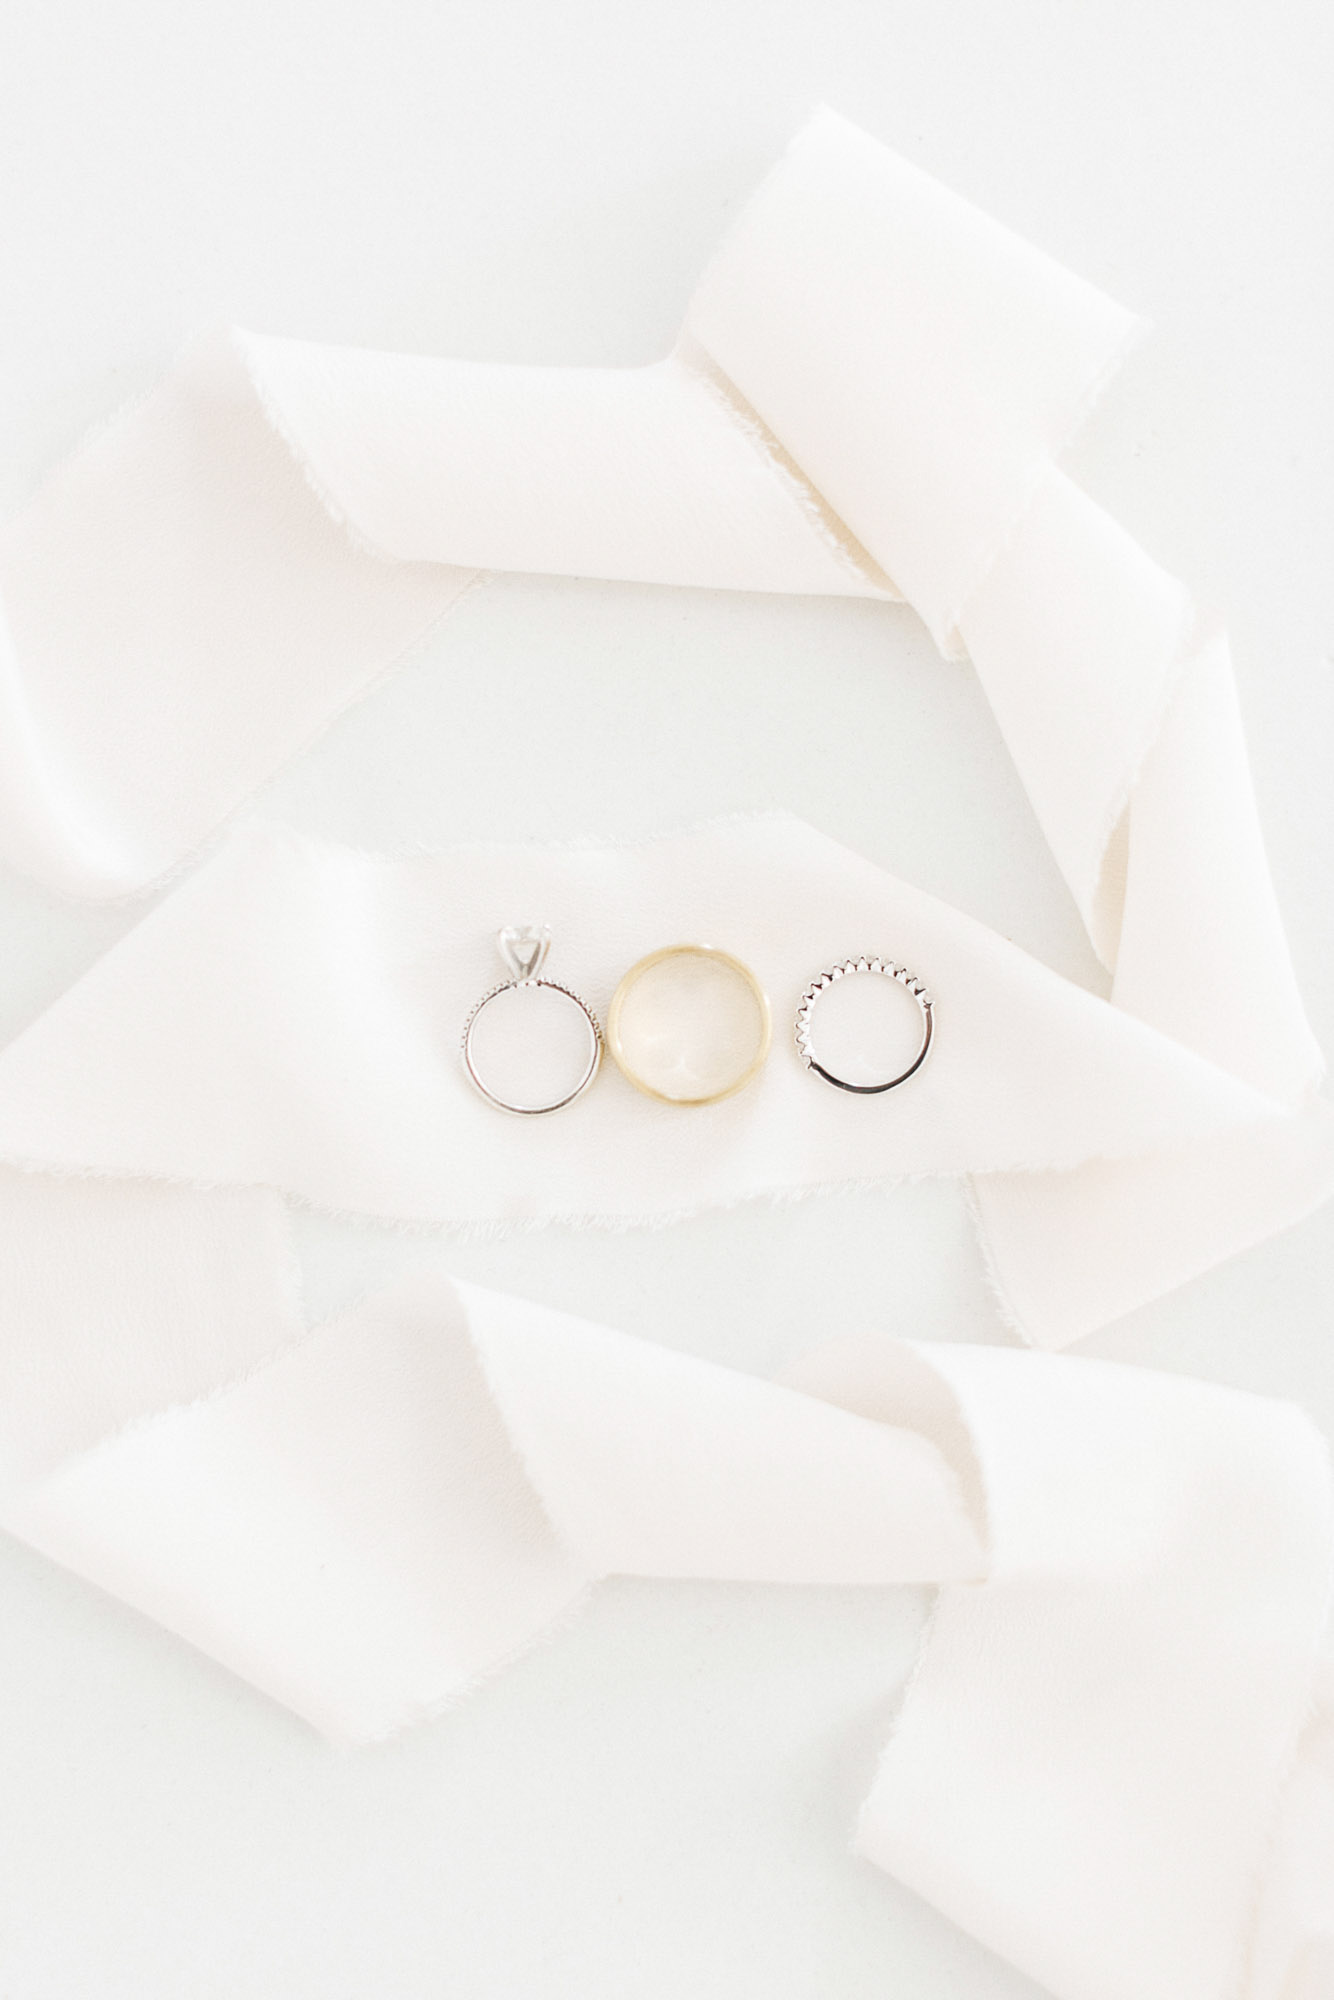 Santorini wedding rings.